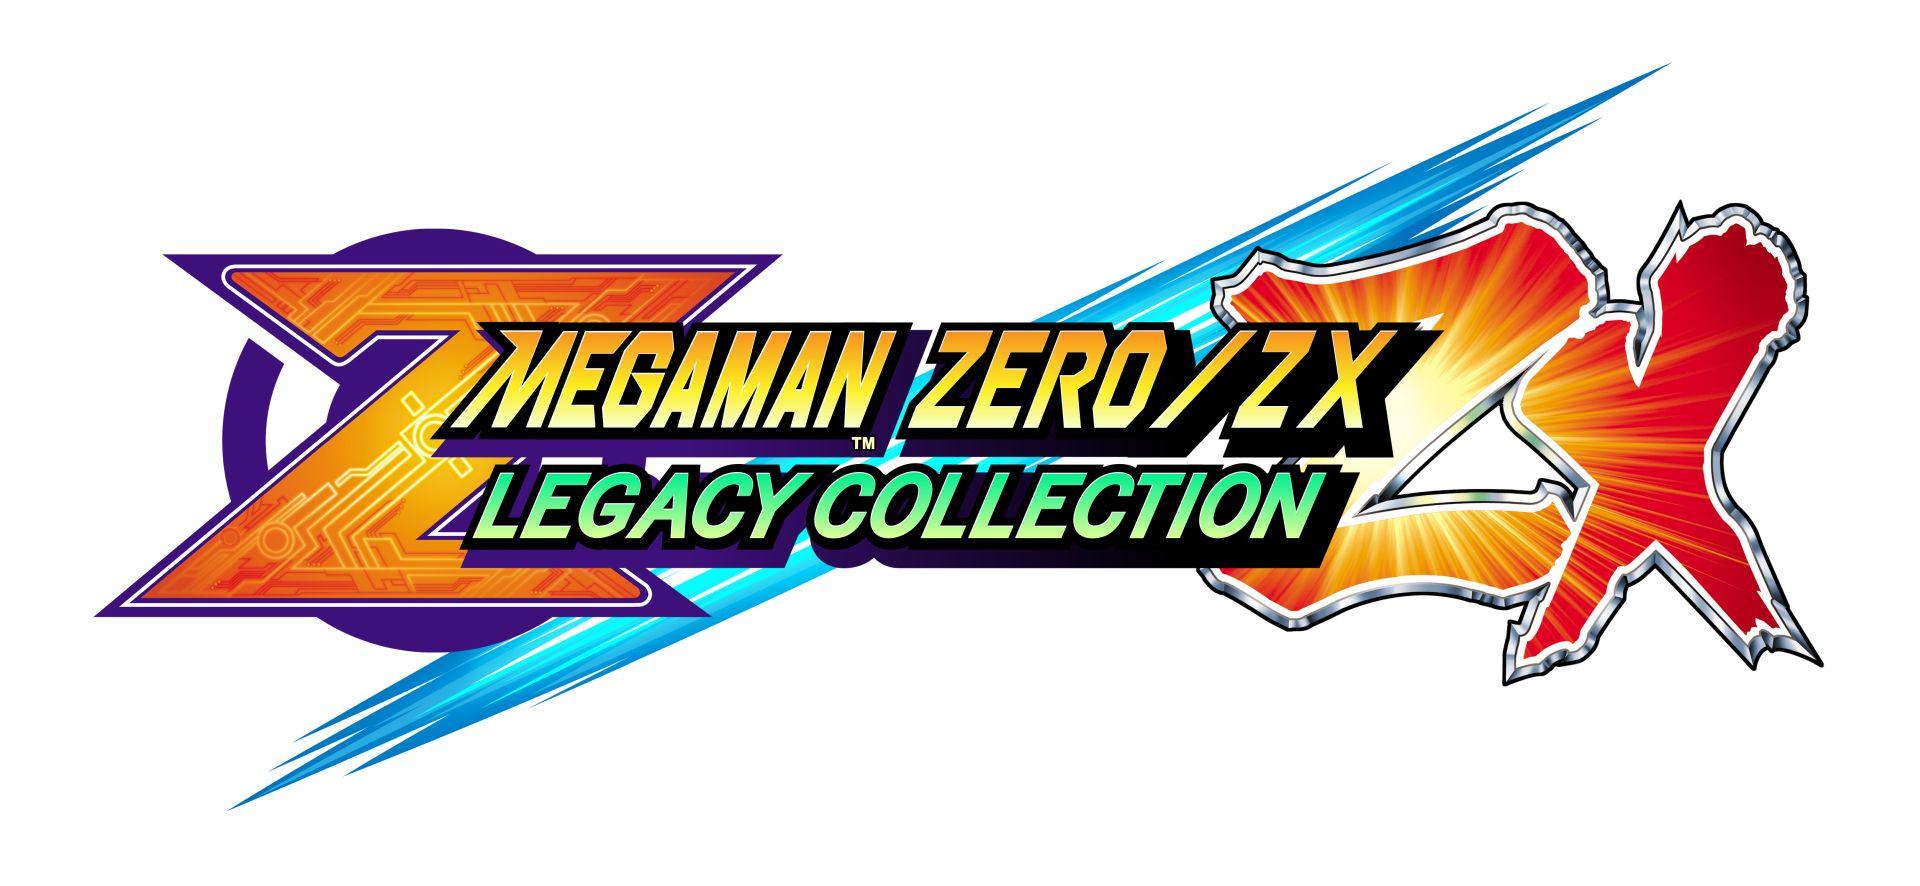 Capcom Announces MEGA MAN ZERO ZX LEGACY COLLECTION To Bring Six